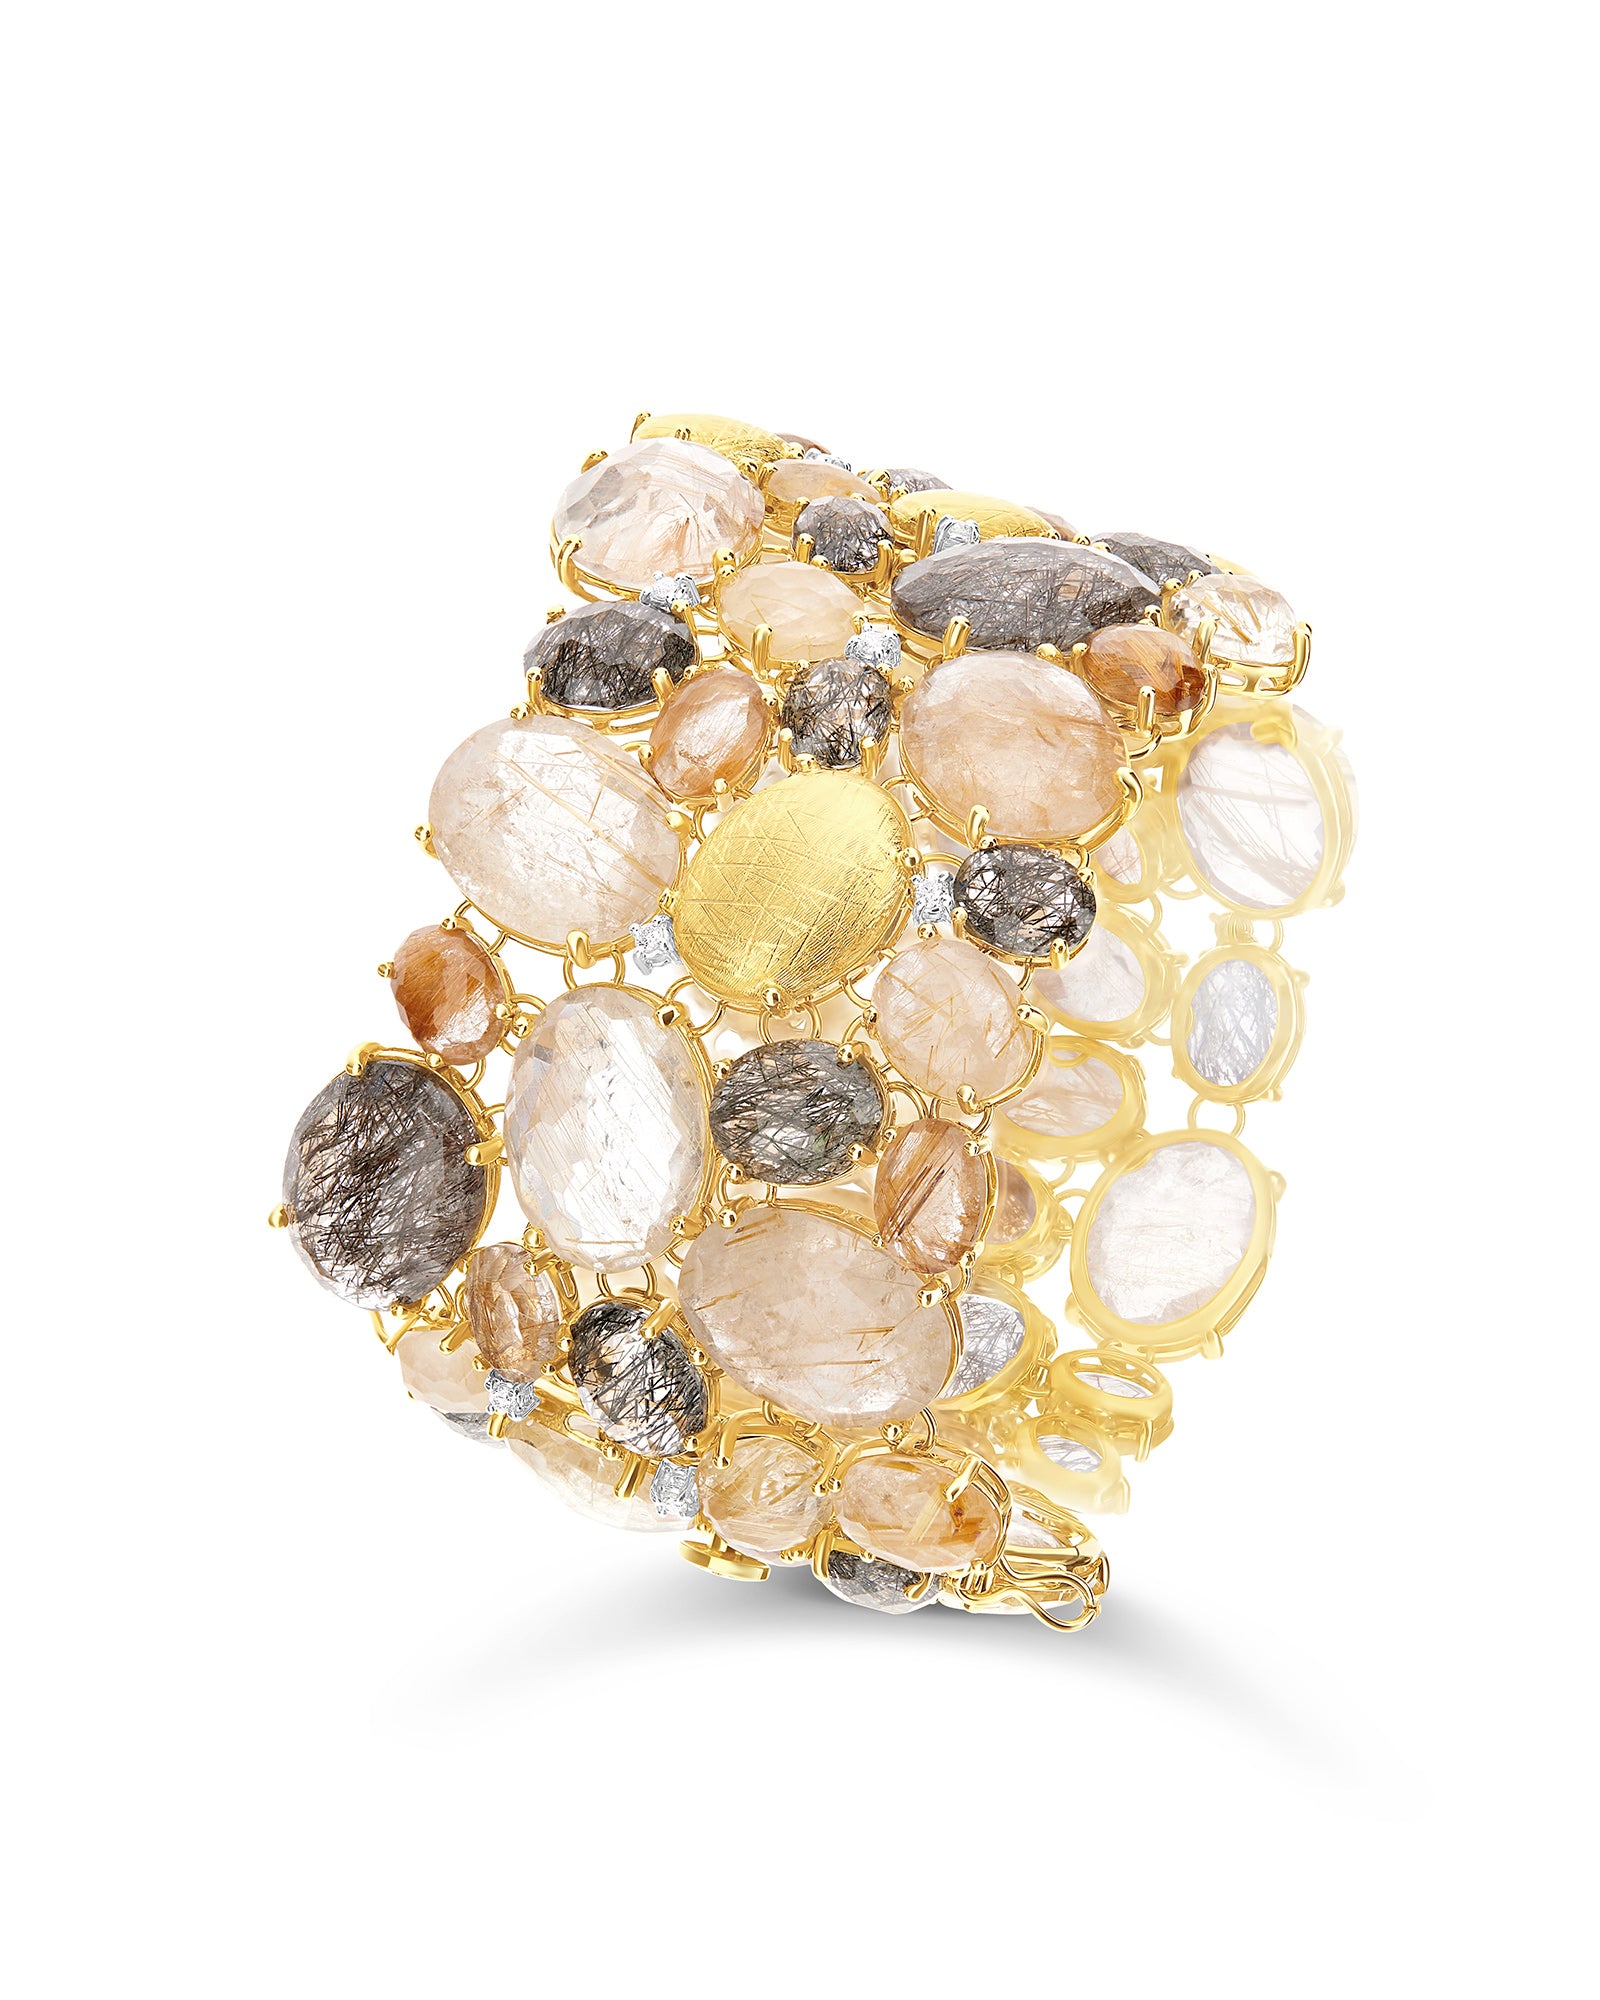 "Ipanema" rutilated quartz, diamonds and gold cuff bracelet